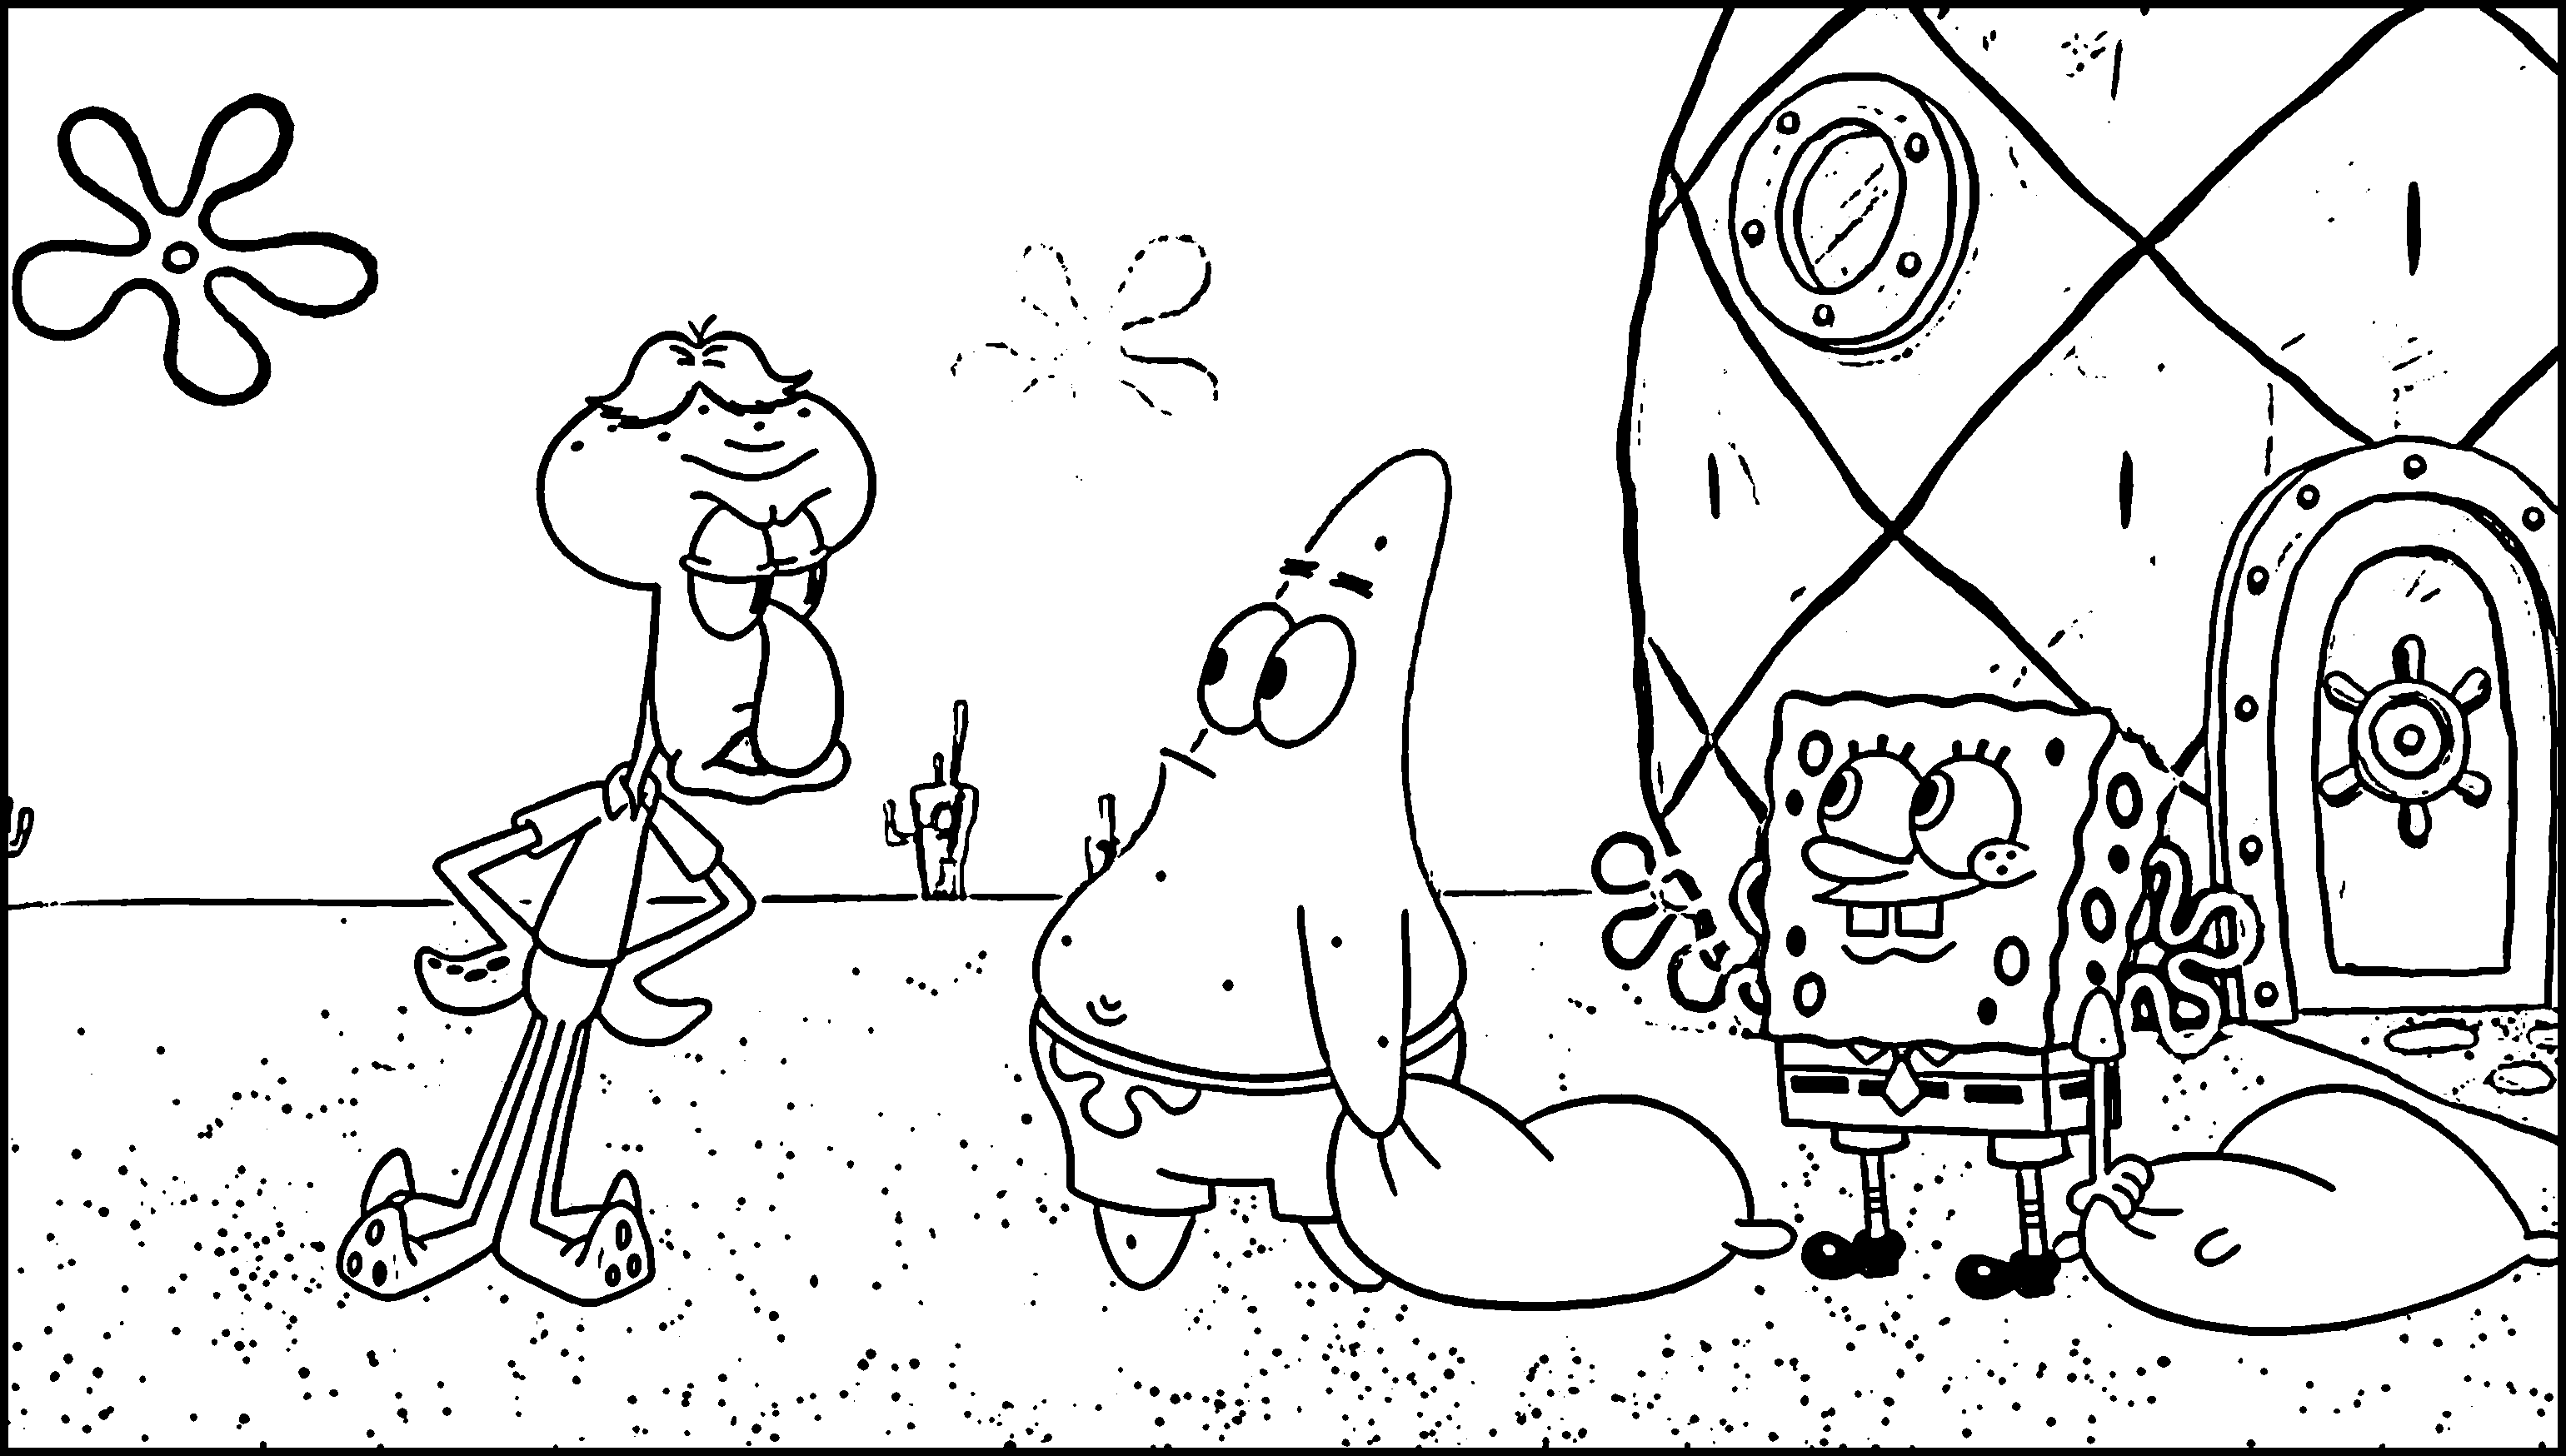 Spongebob Squarepants Art by DO